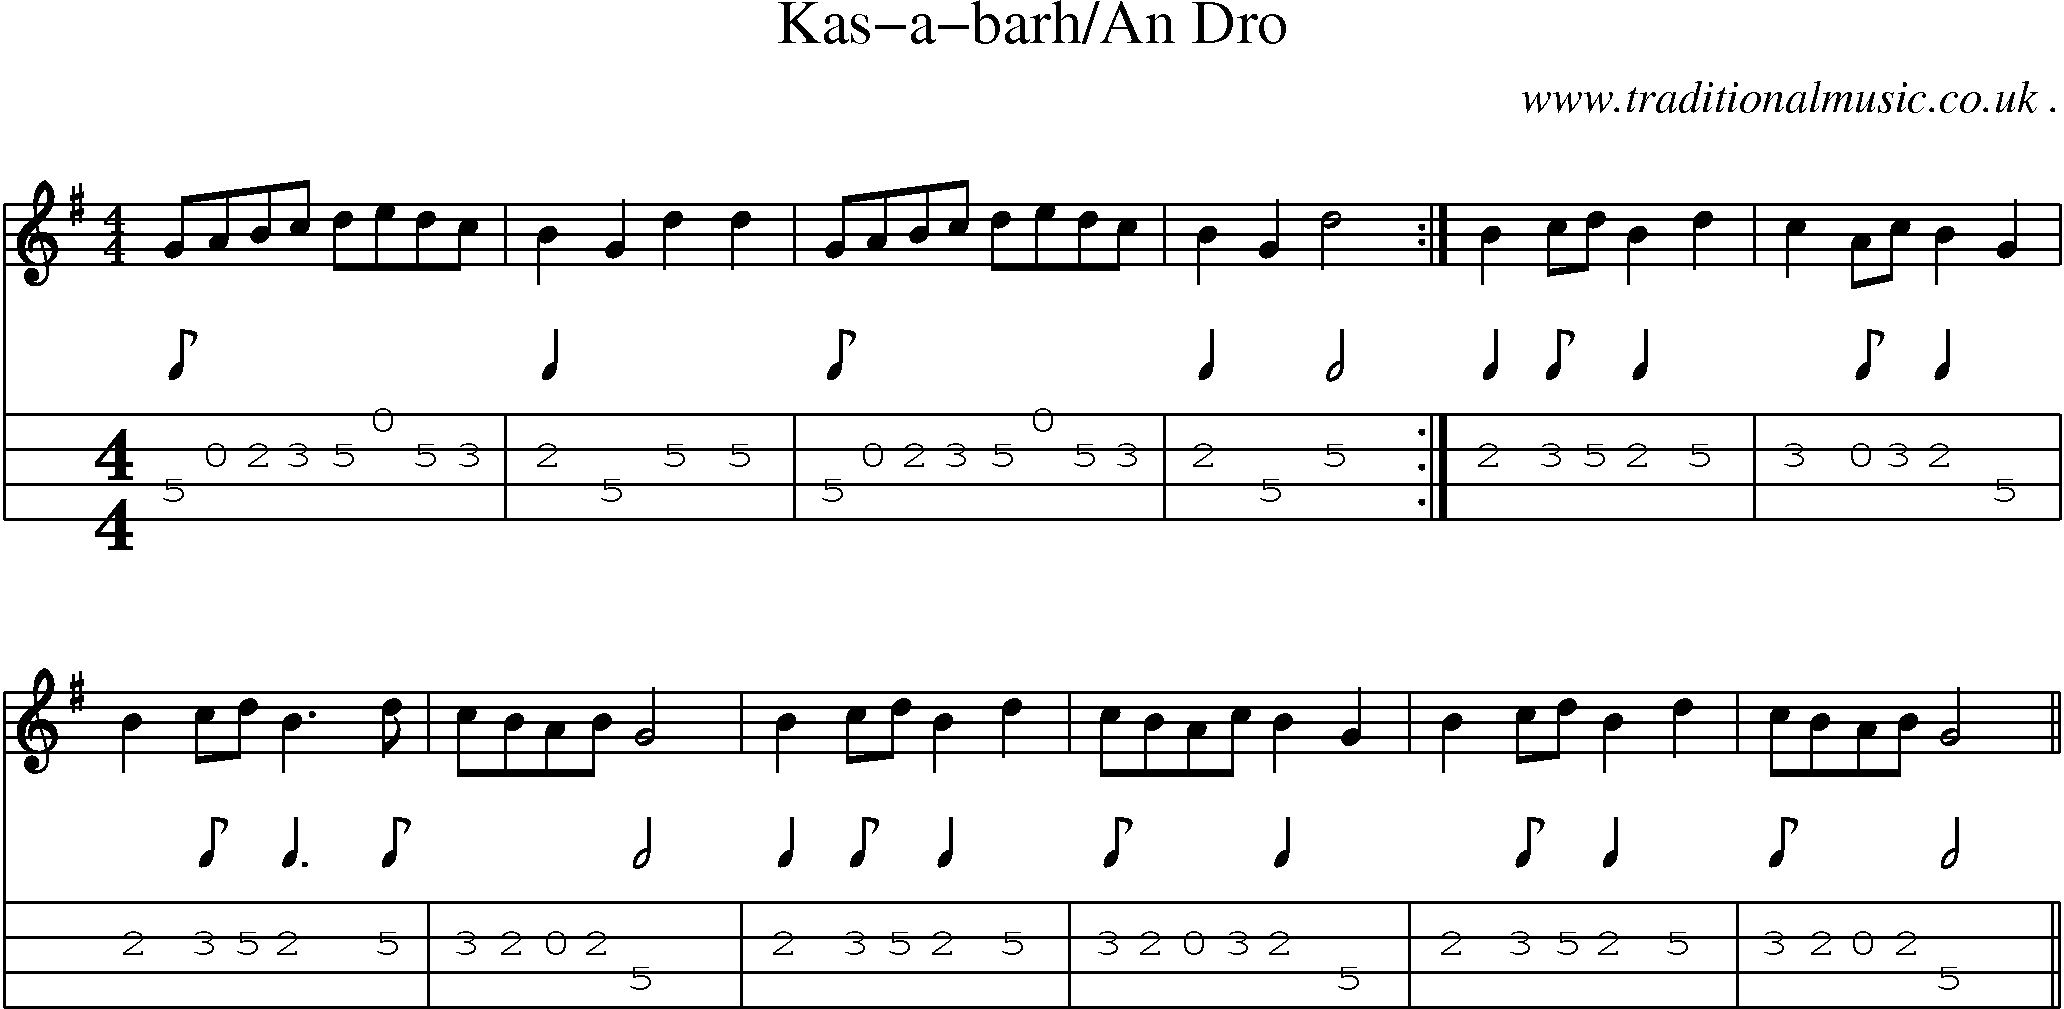 Sheet-Music and Mandolin Tabs for Kas-a-barhan Dro